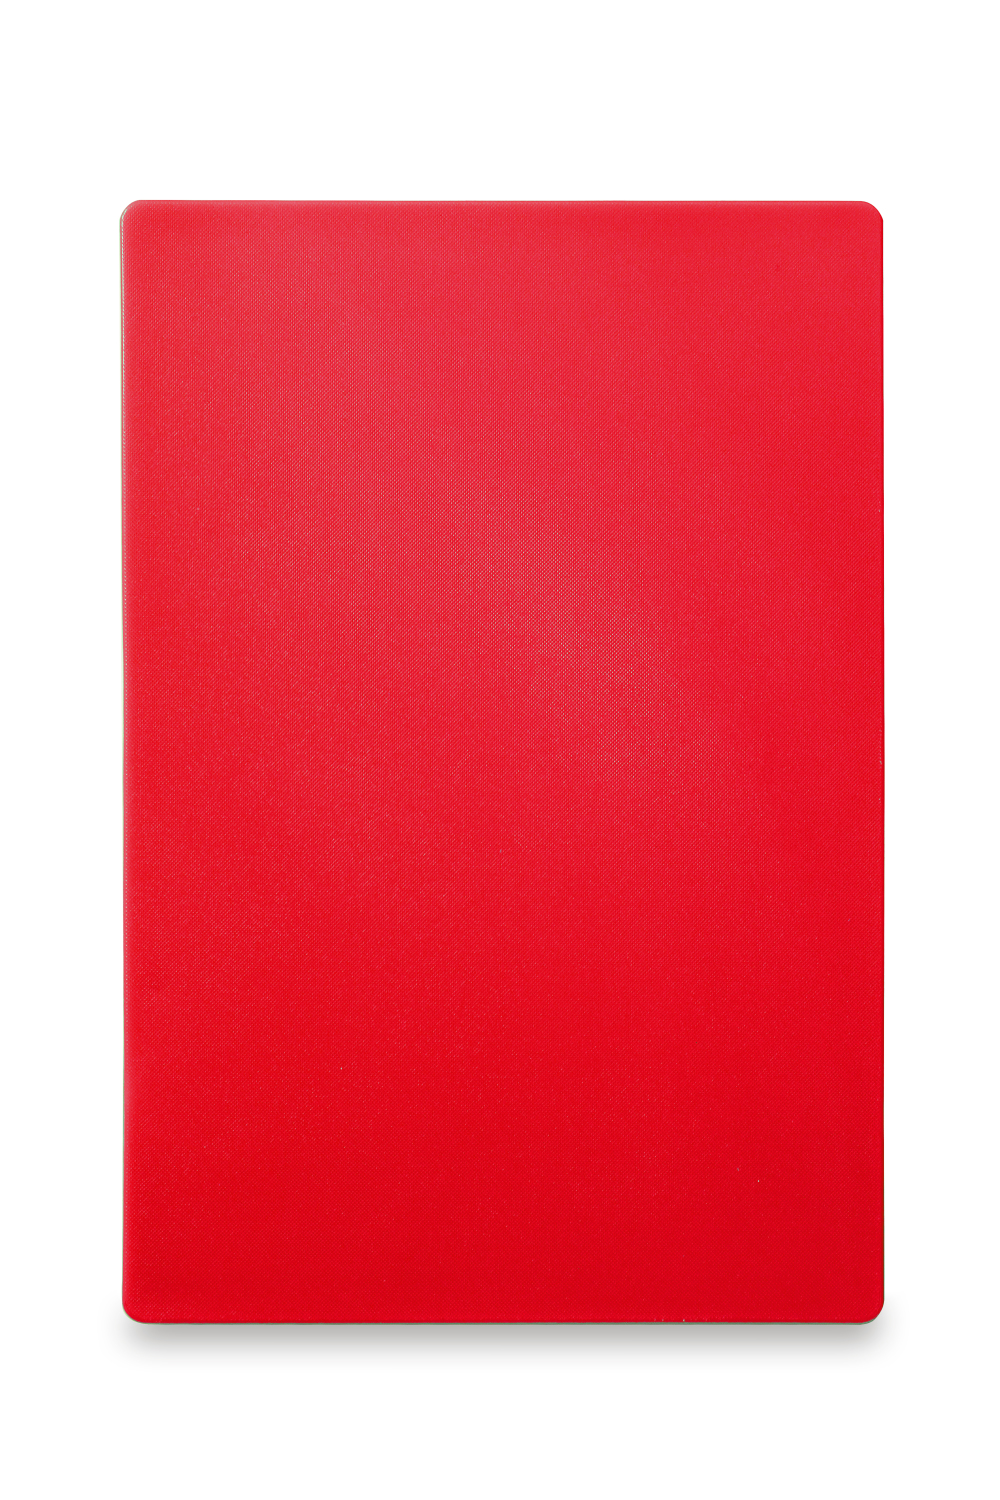 HACCP-Rot Schneidbrett 600x400mm